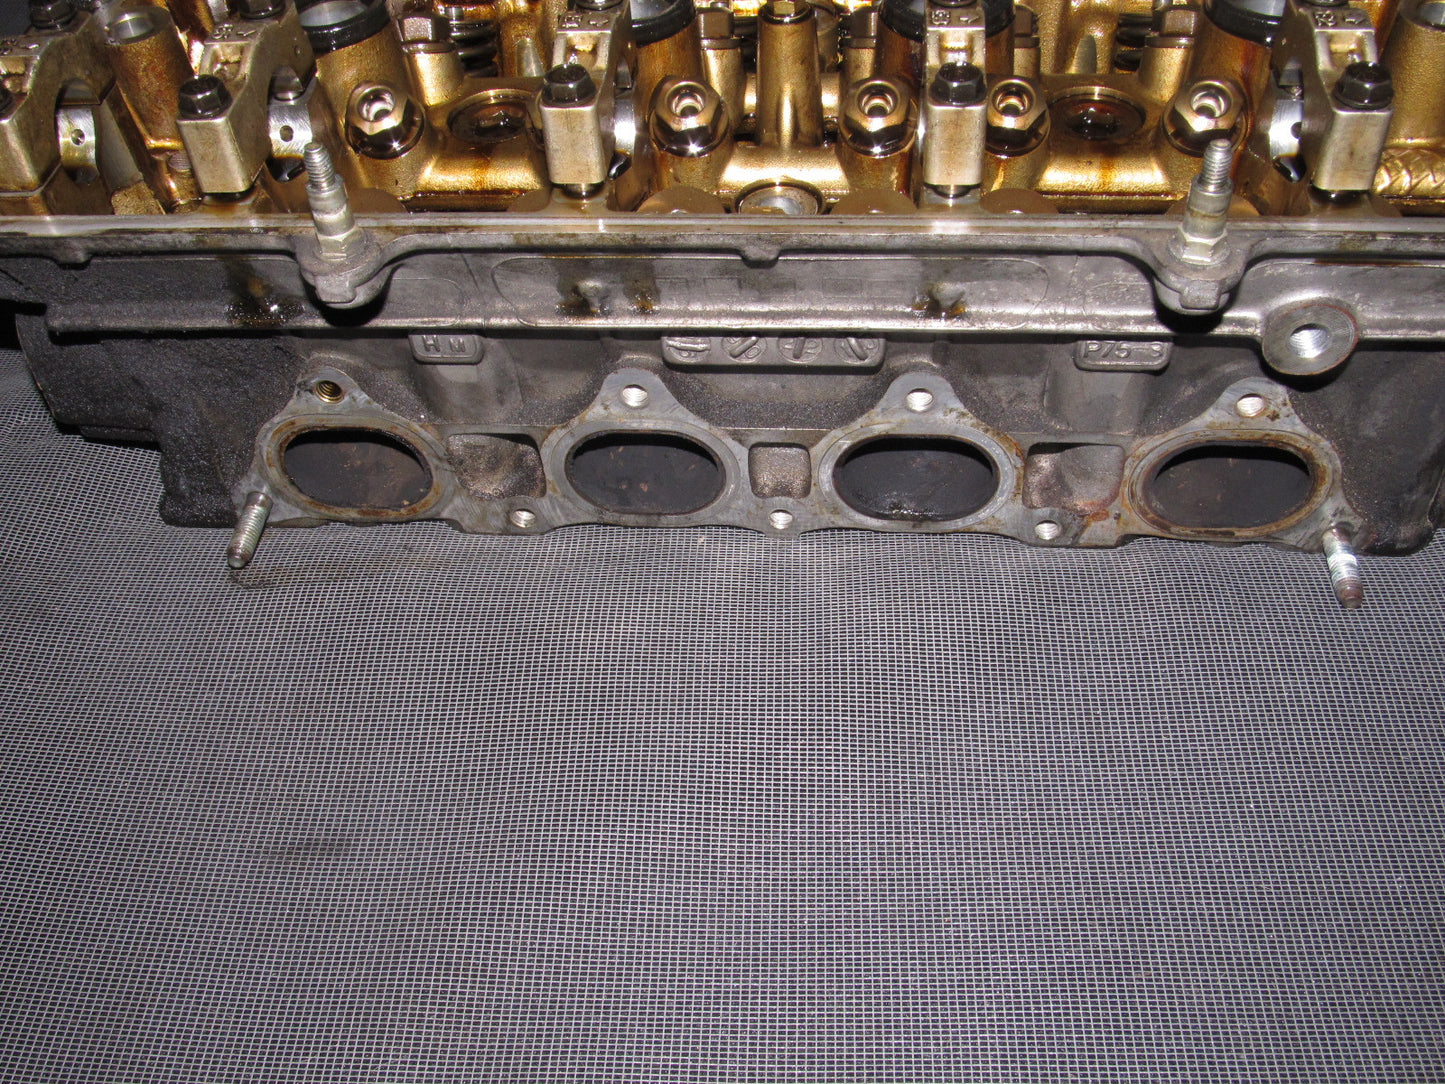 96-01 Acura Integra OEM B18B1 Cylinder Head